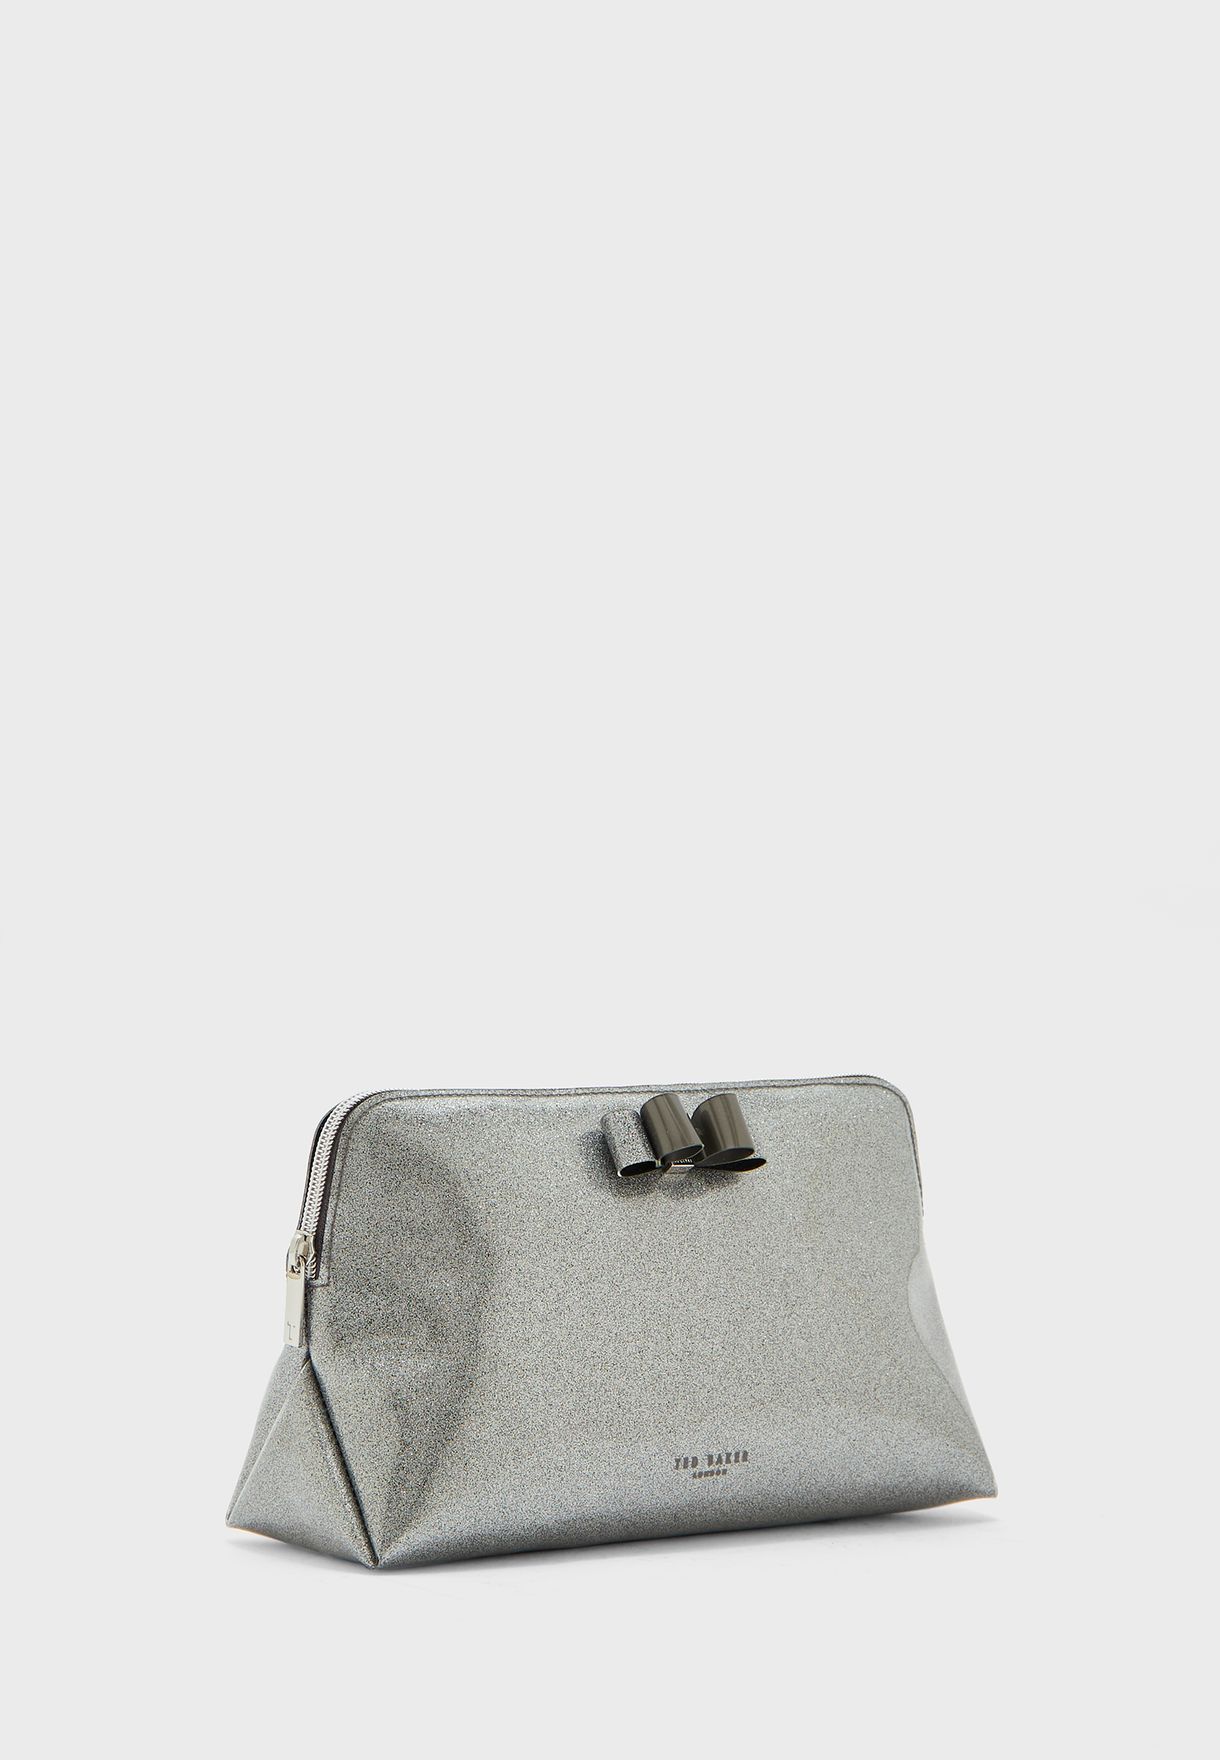 Ted Baker Leather Glara Small Glitter Bobble Purse Wallet in Silver :  Amazon.co.uk: Fashion